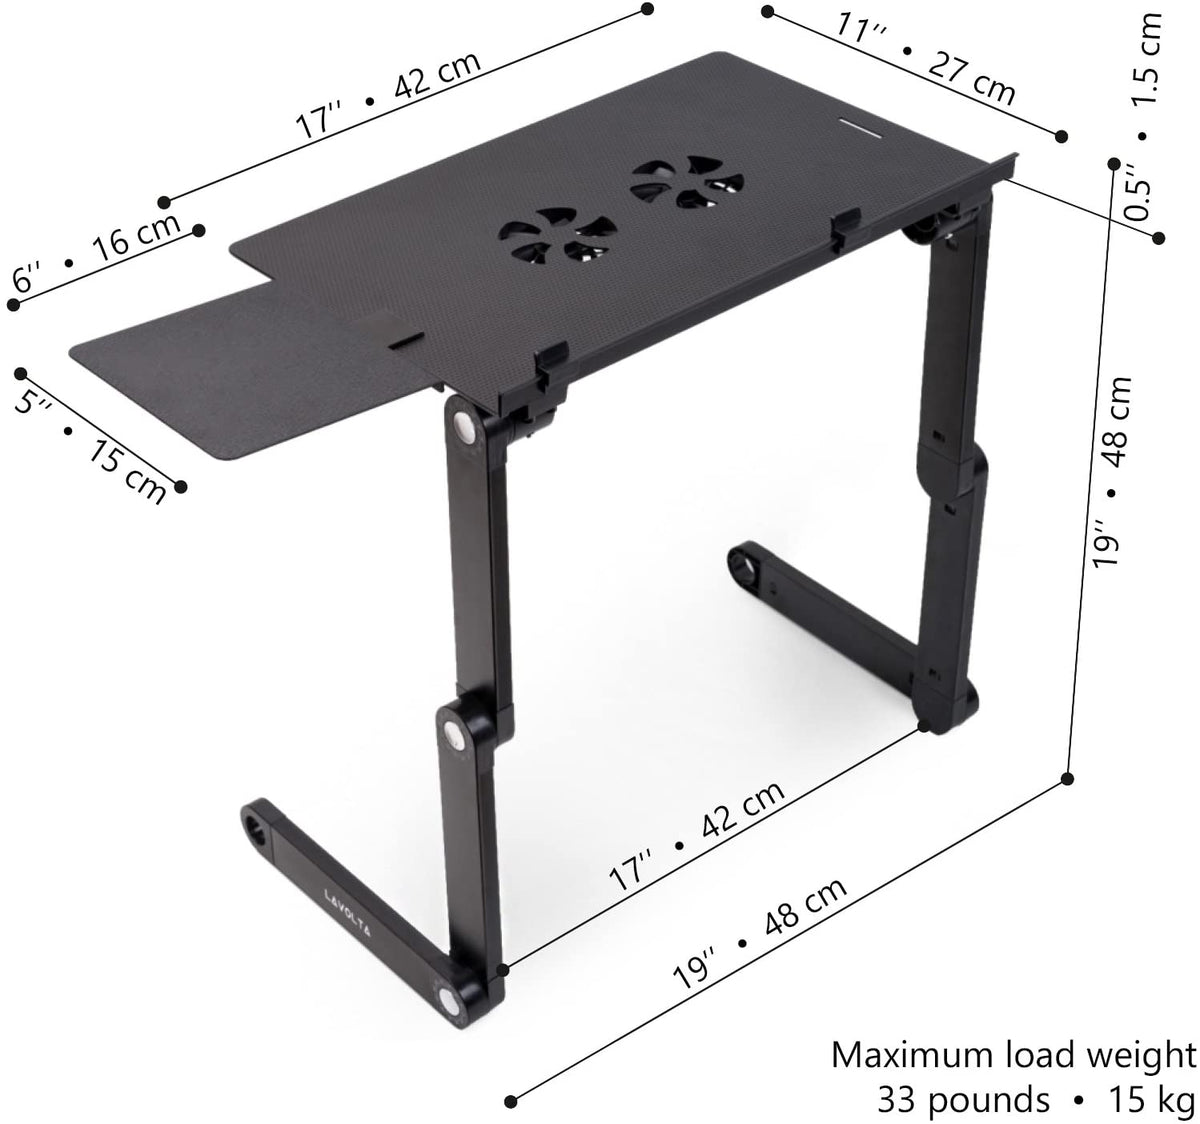 Lavolta Folding Laptop Desk with Mouse Board - Black